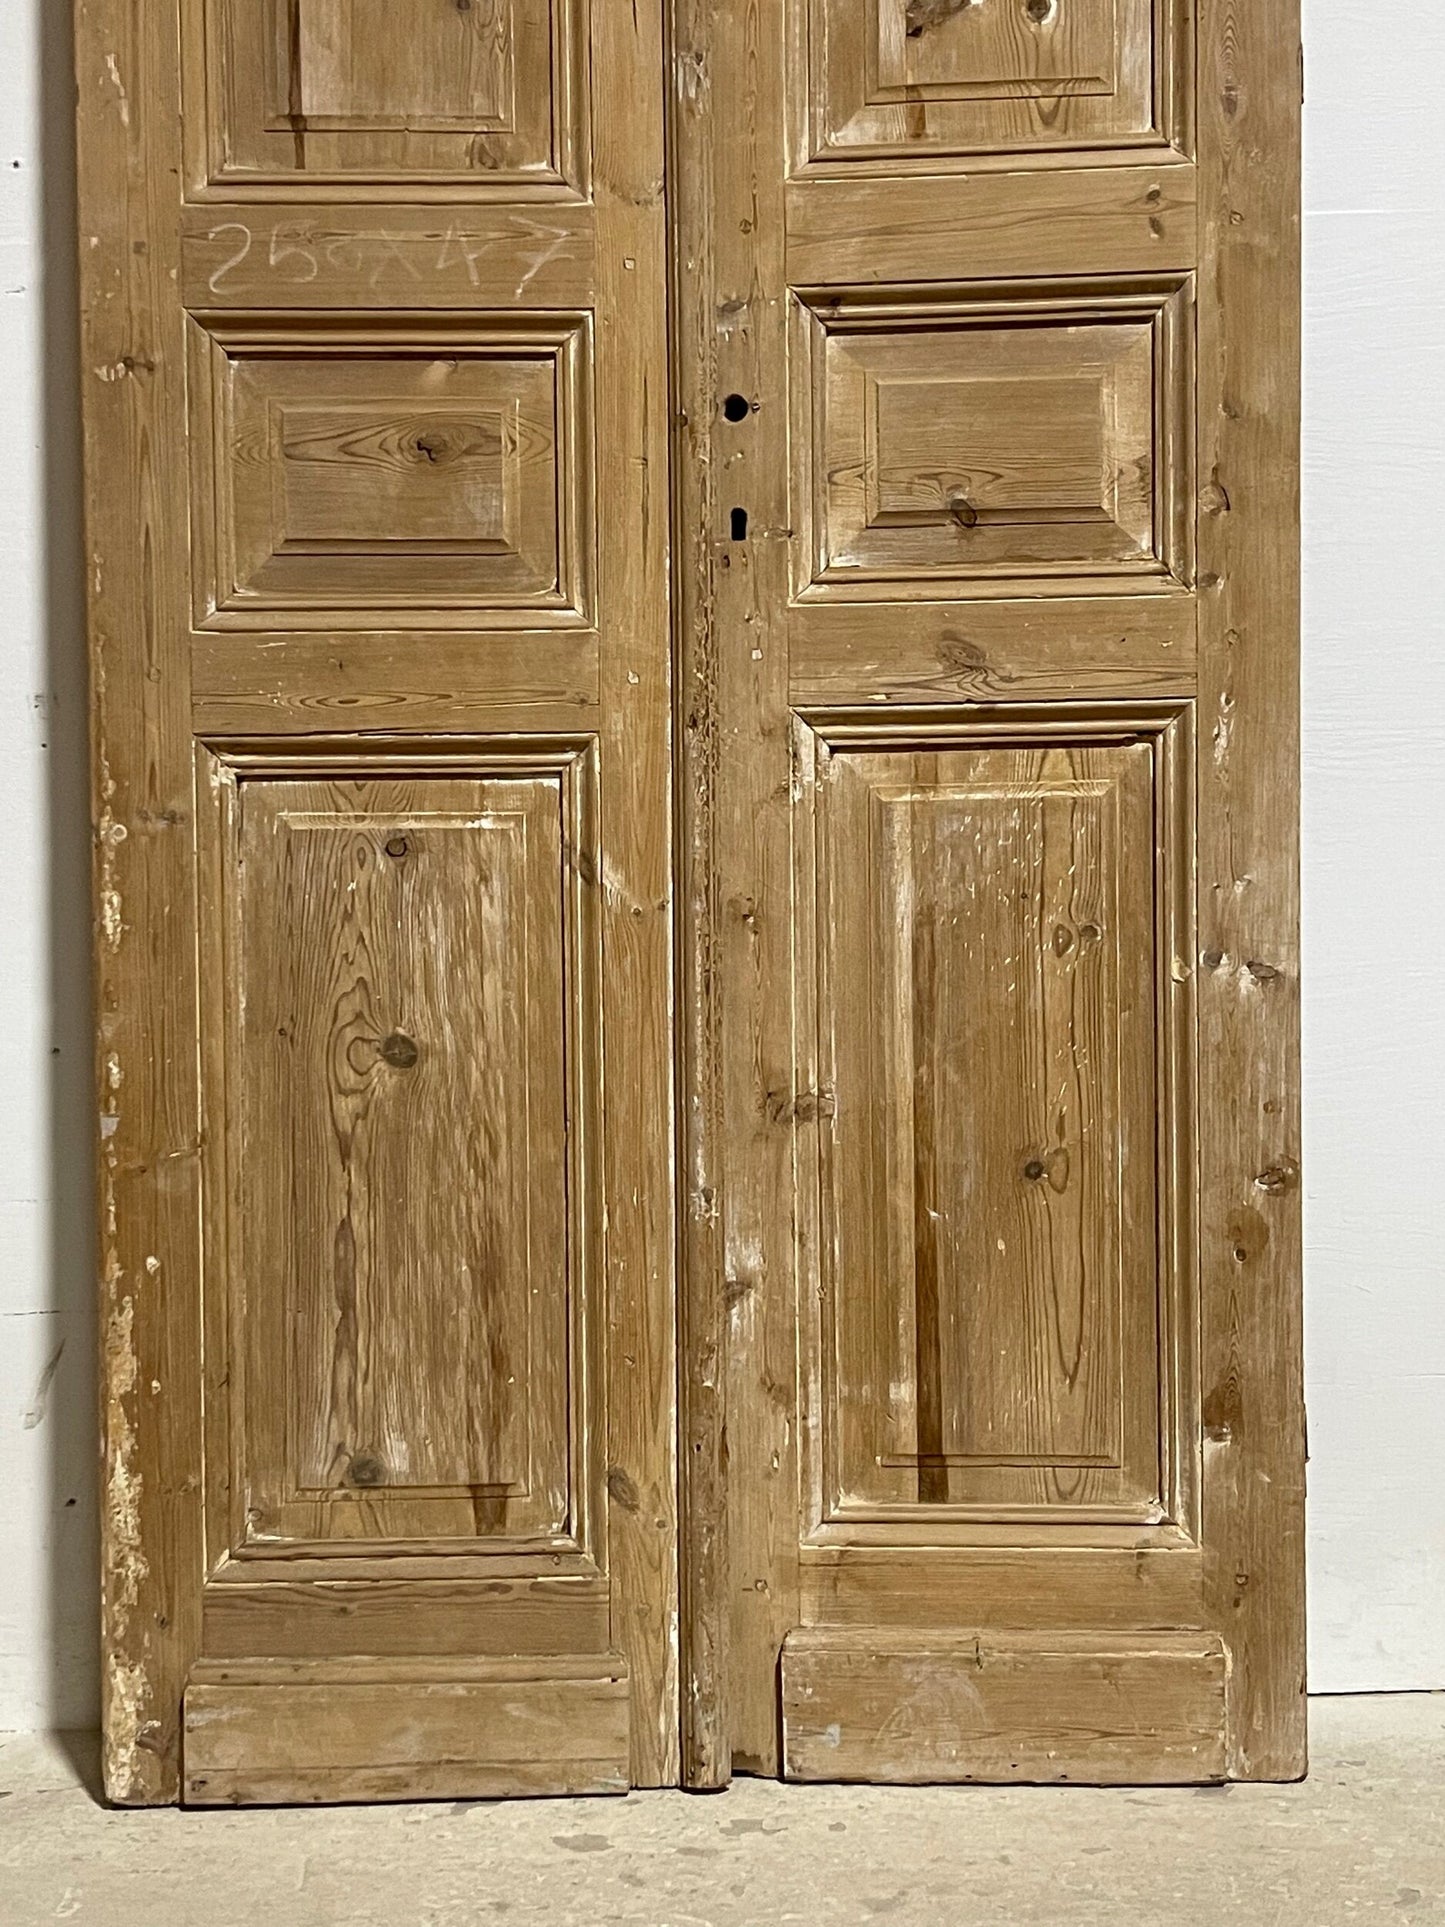 Antique French panel doors (99x36.25) I172